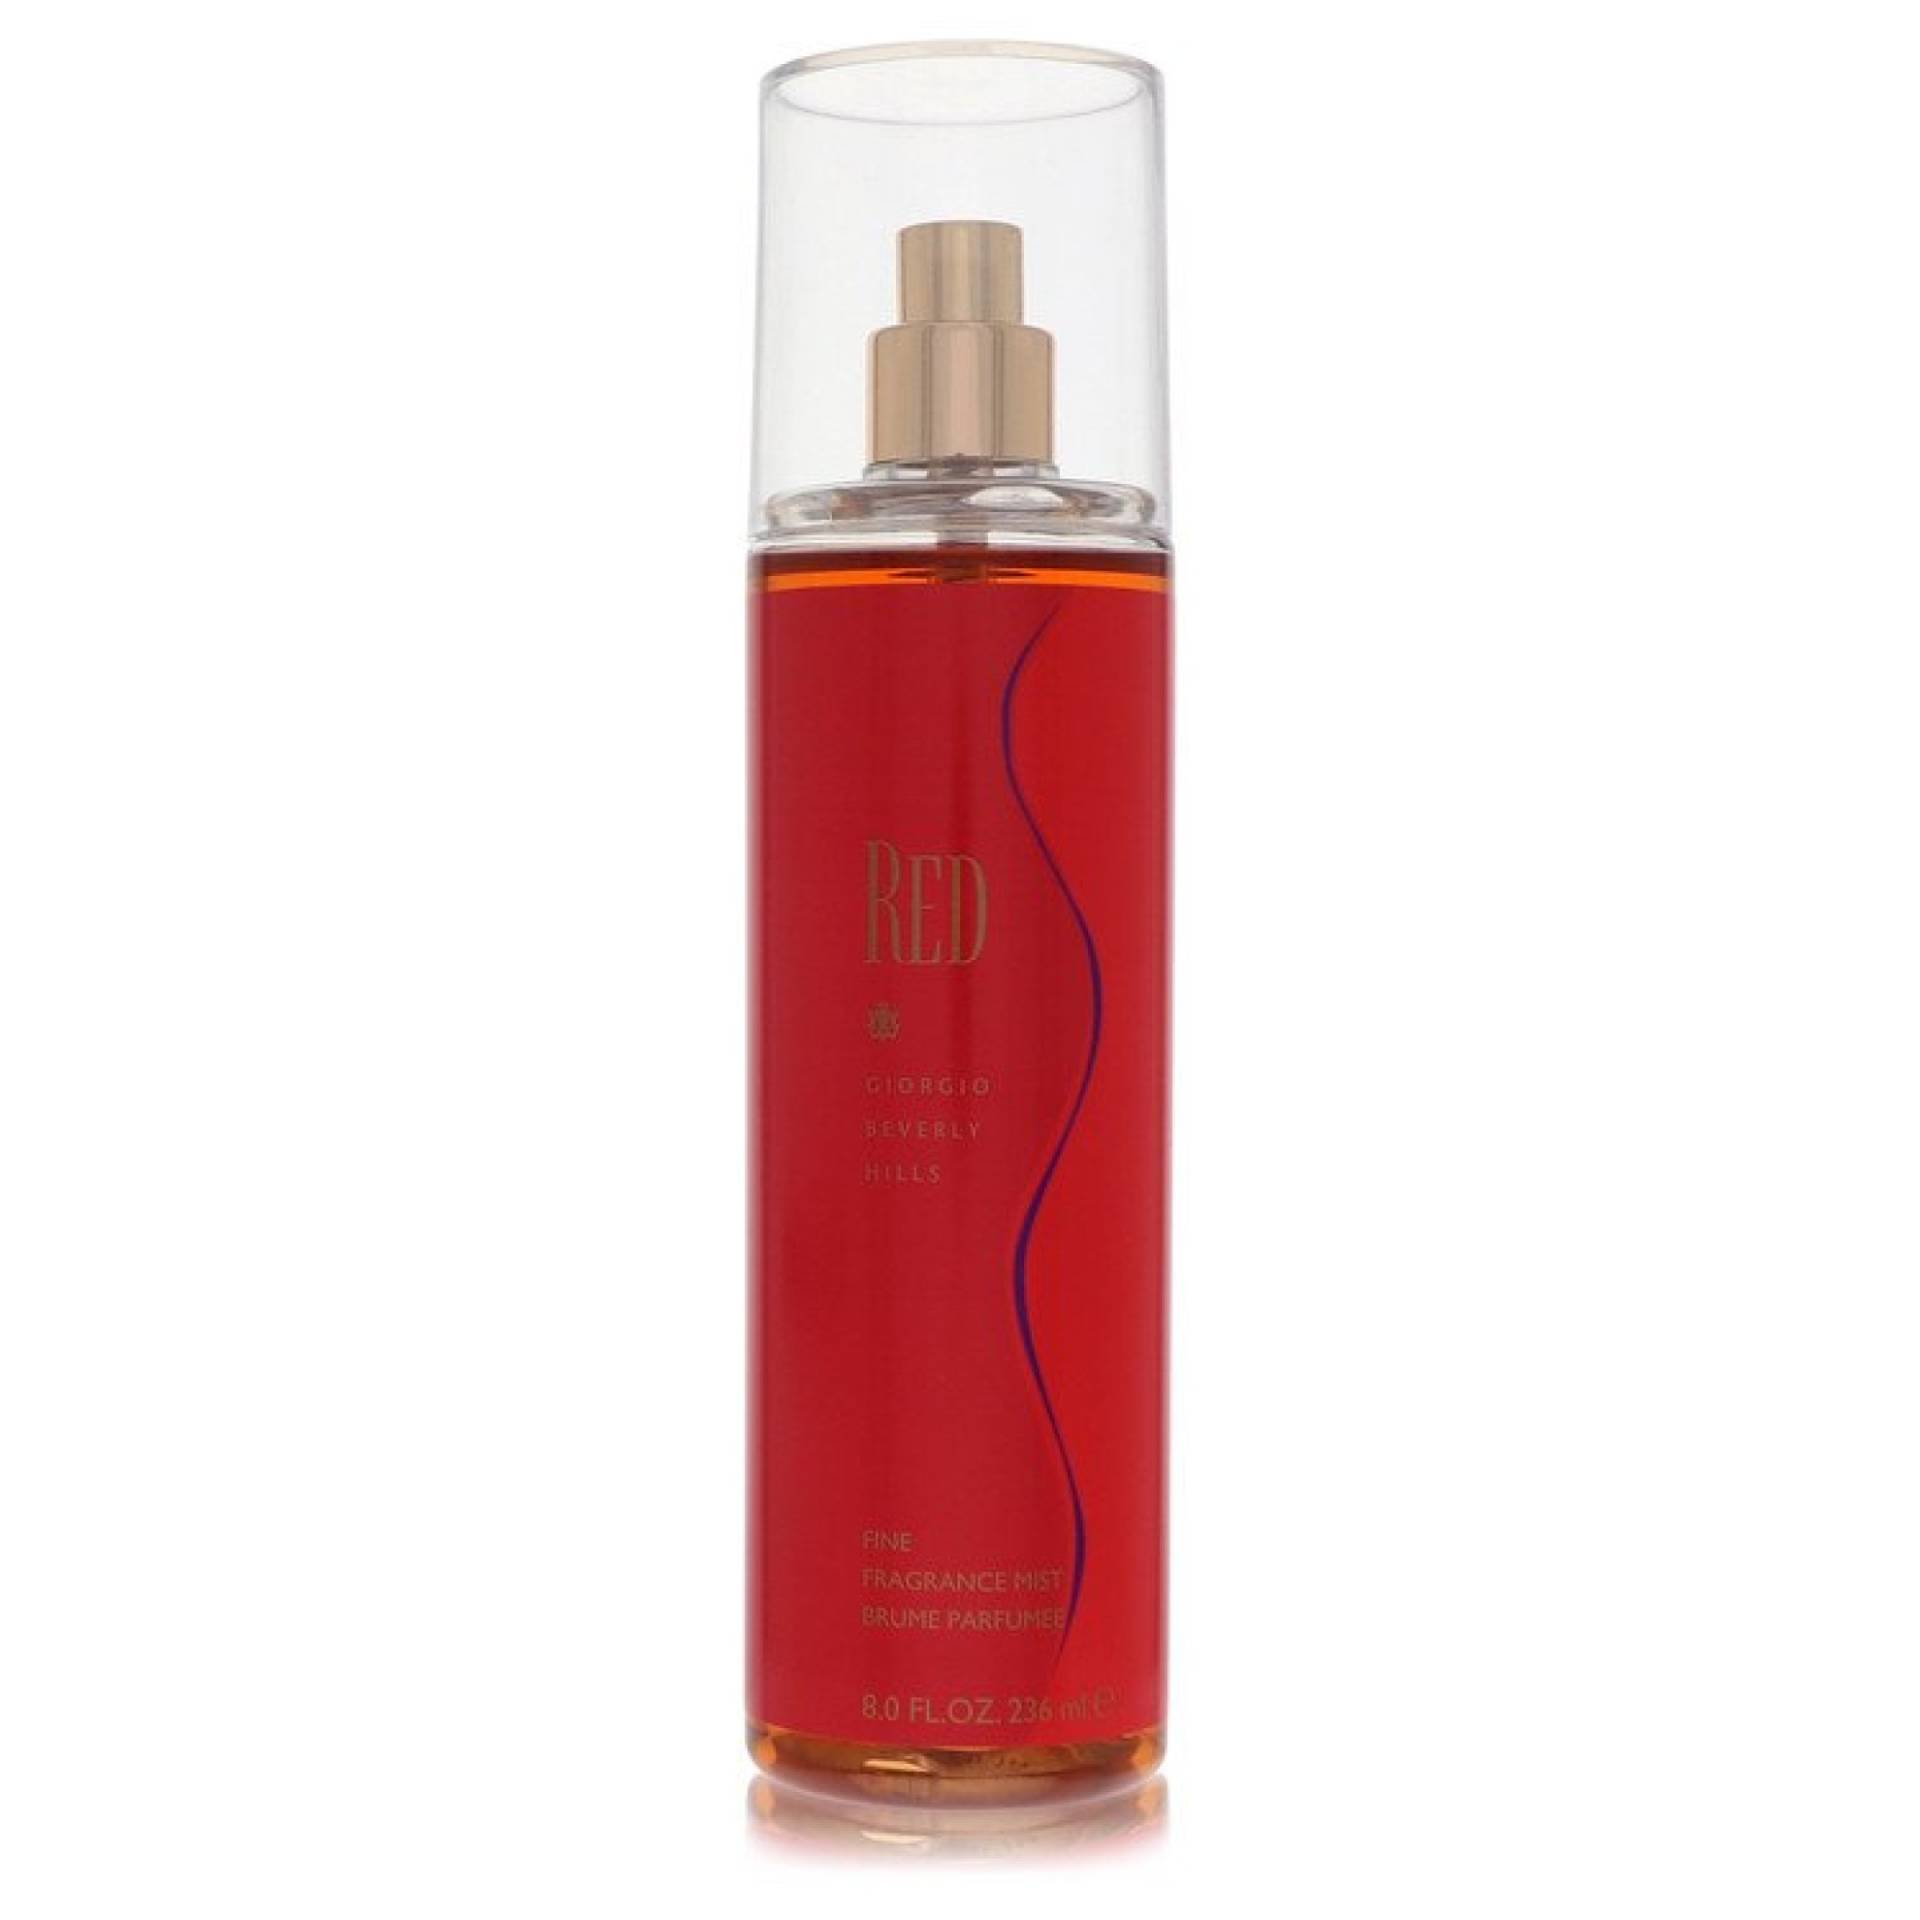 Giorgio Beverly Hills RED Fragrance Mist 240 ml